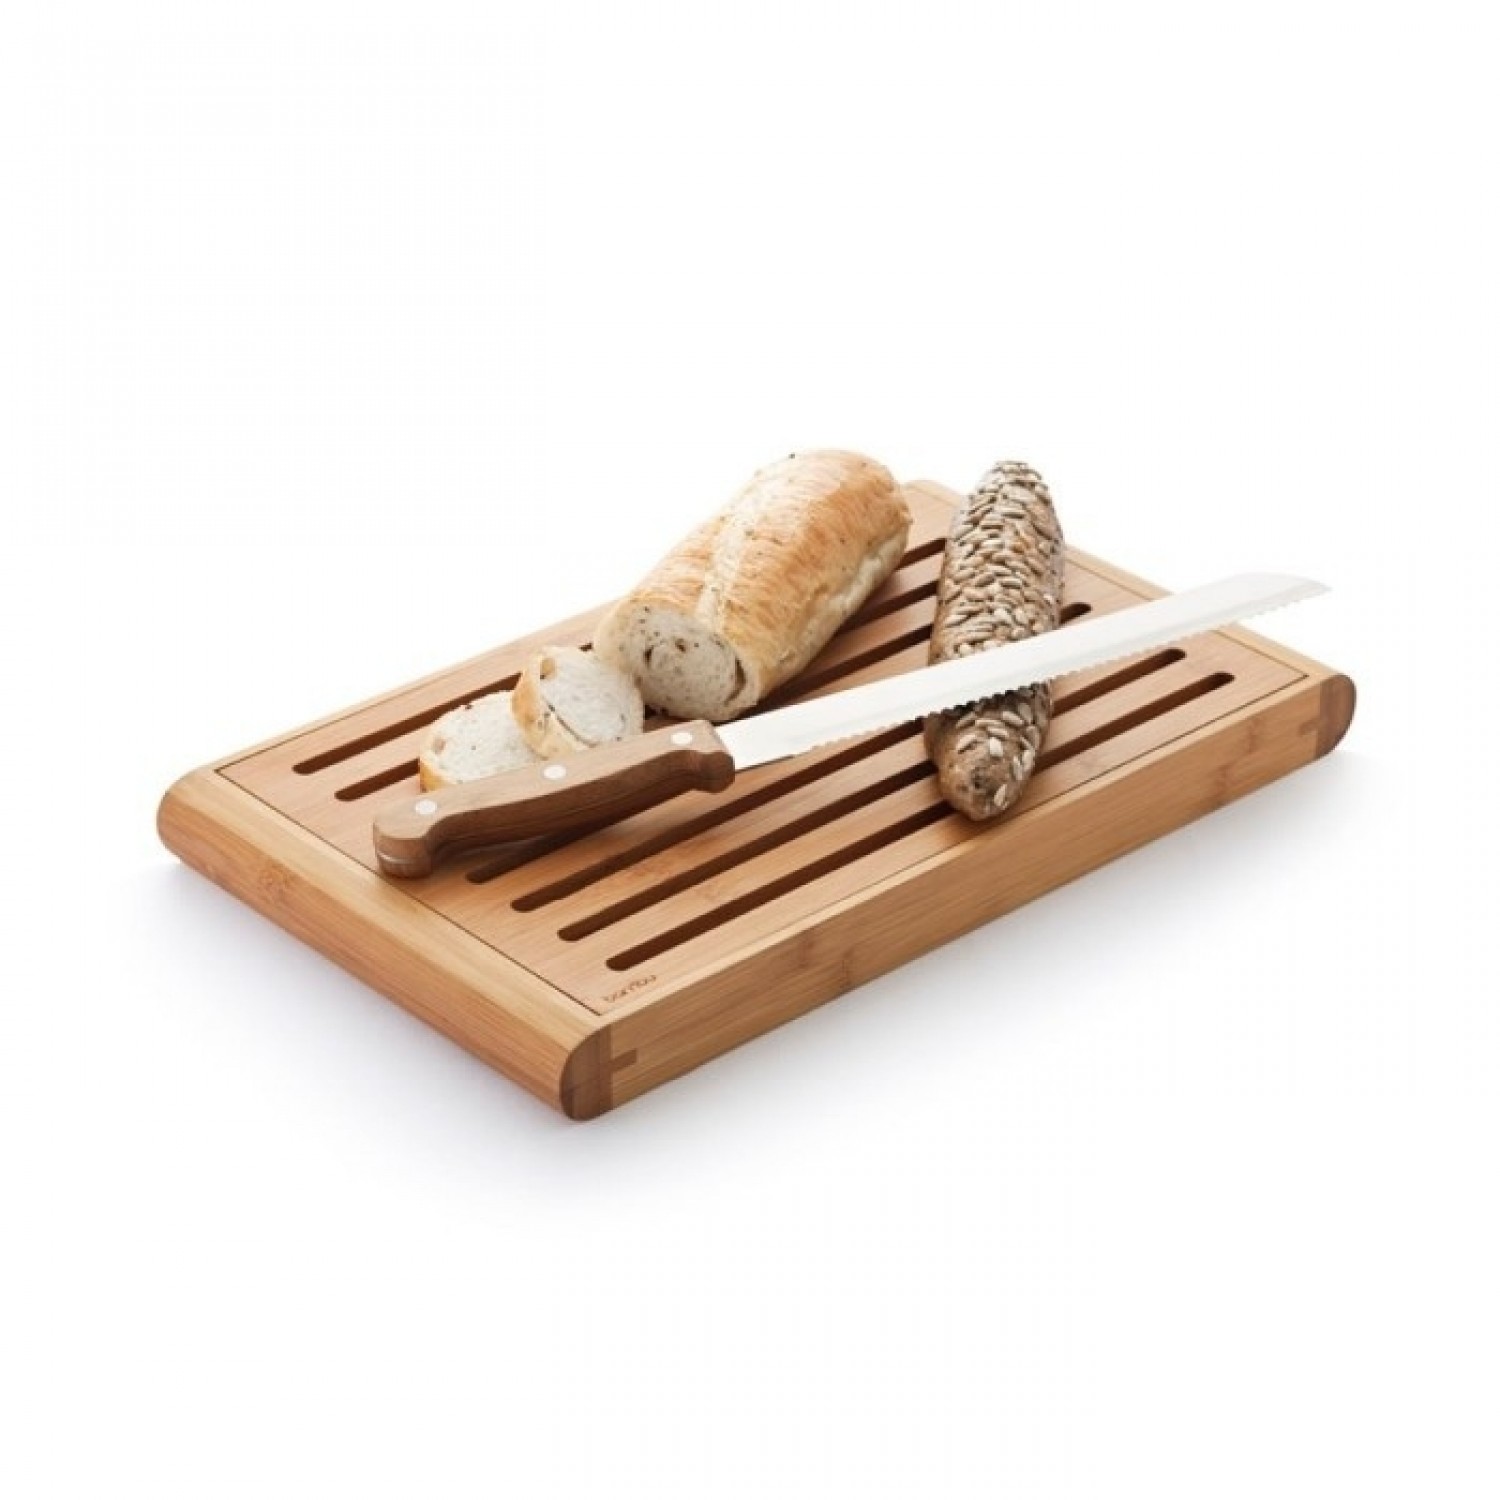 Fair trade bamboo breadboard with crumb catcher | bambu